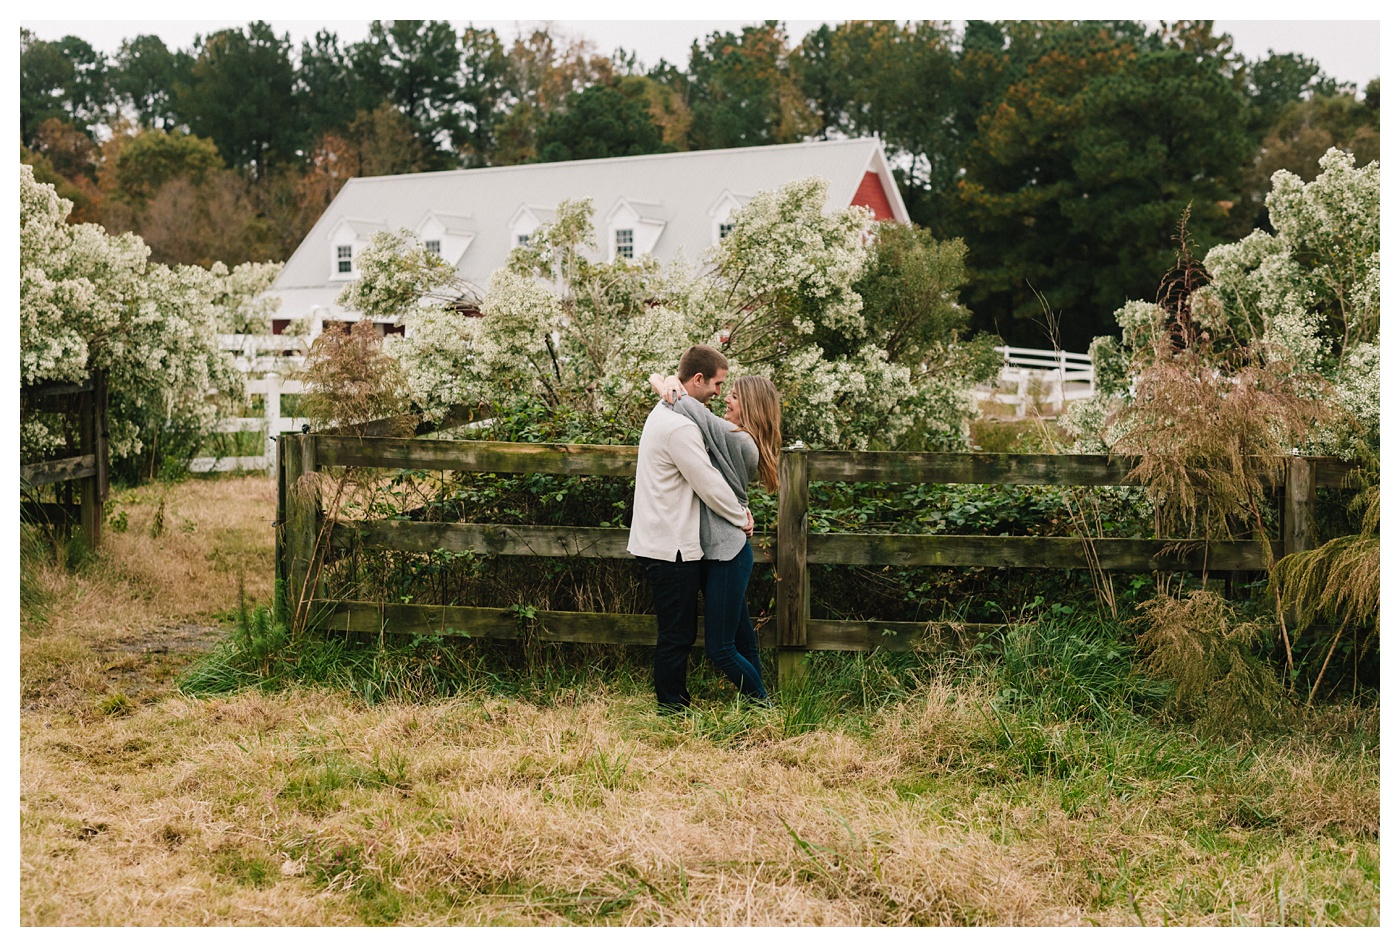 Fall Engagement Photos by Amanda and Grady